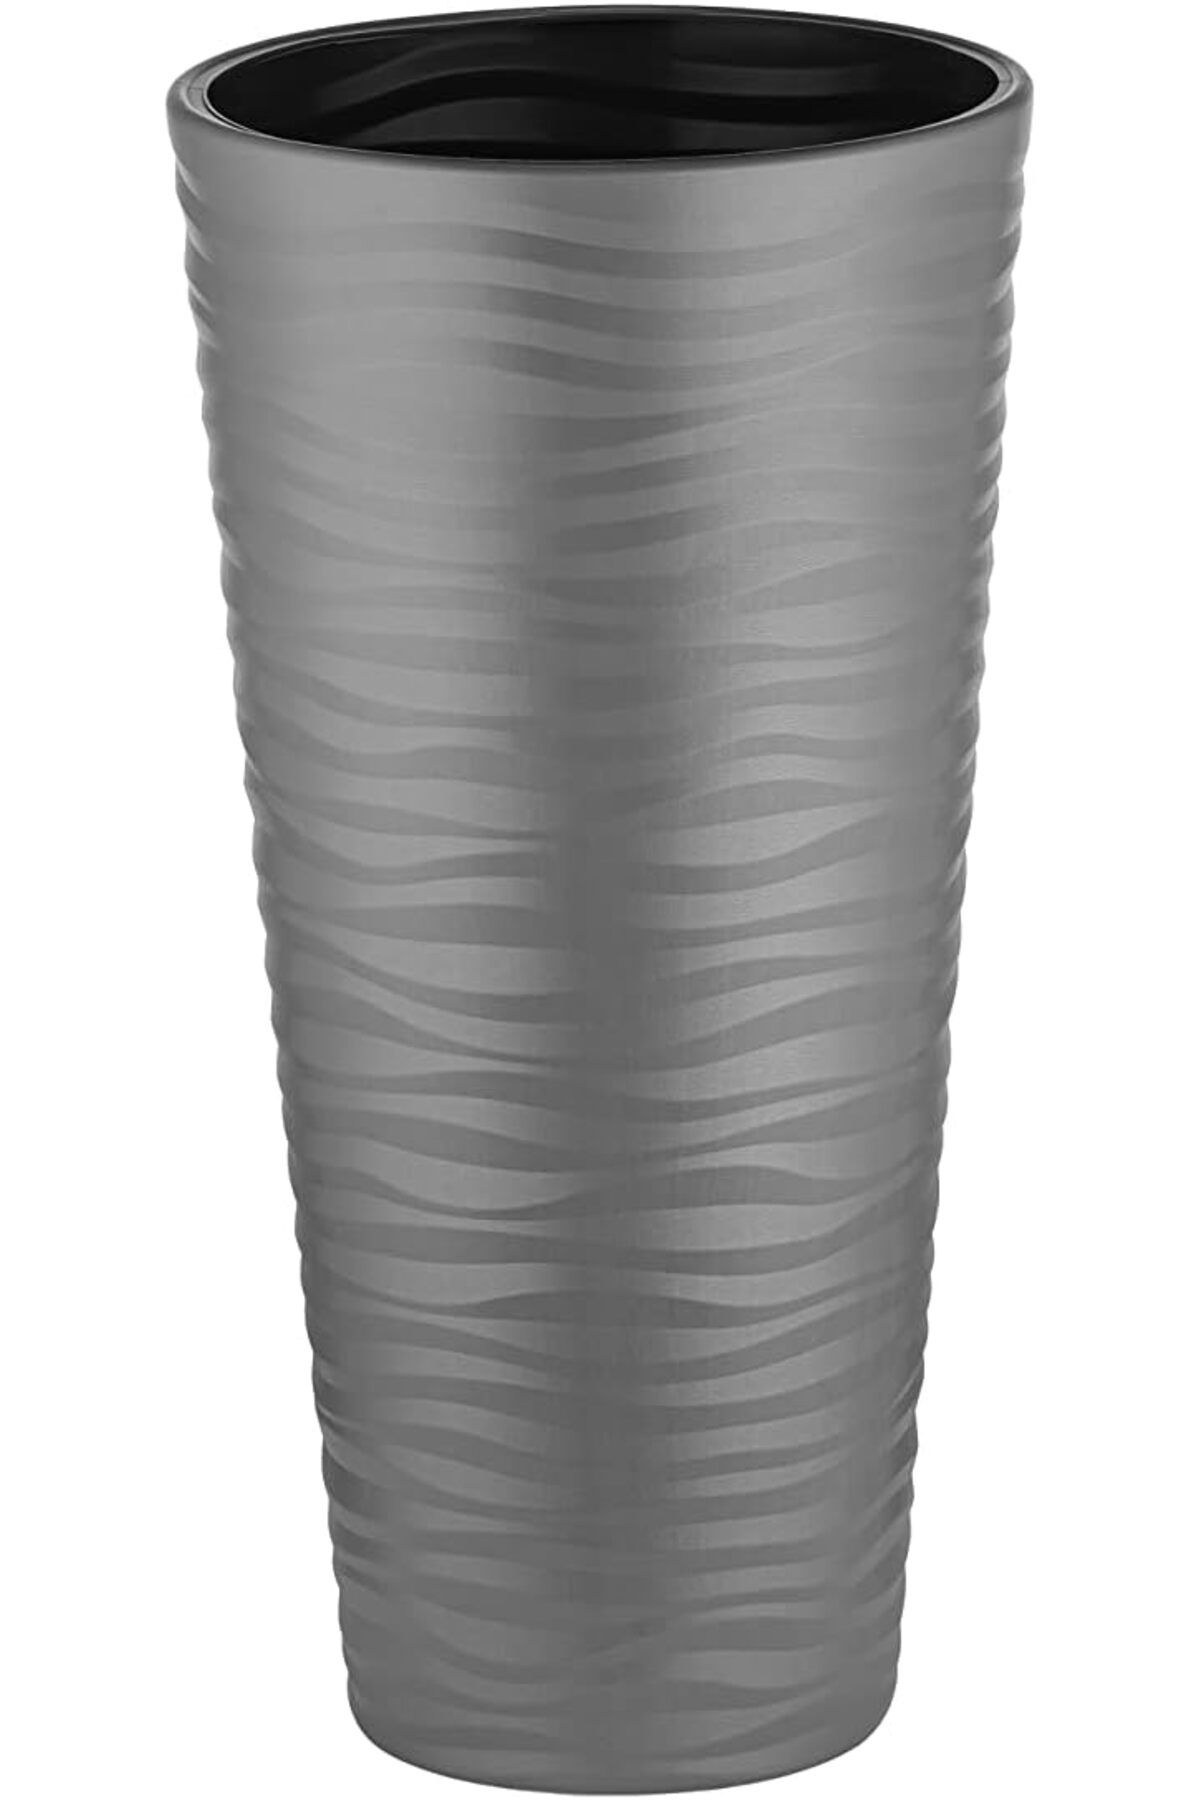 SERİNOVA Serinova KVT1 Kumsal Vazo Saksı No: 1, 30 cm, 5,5 Litre Antrasit